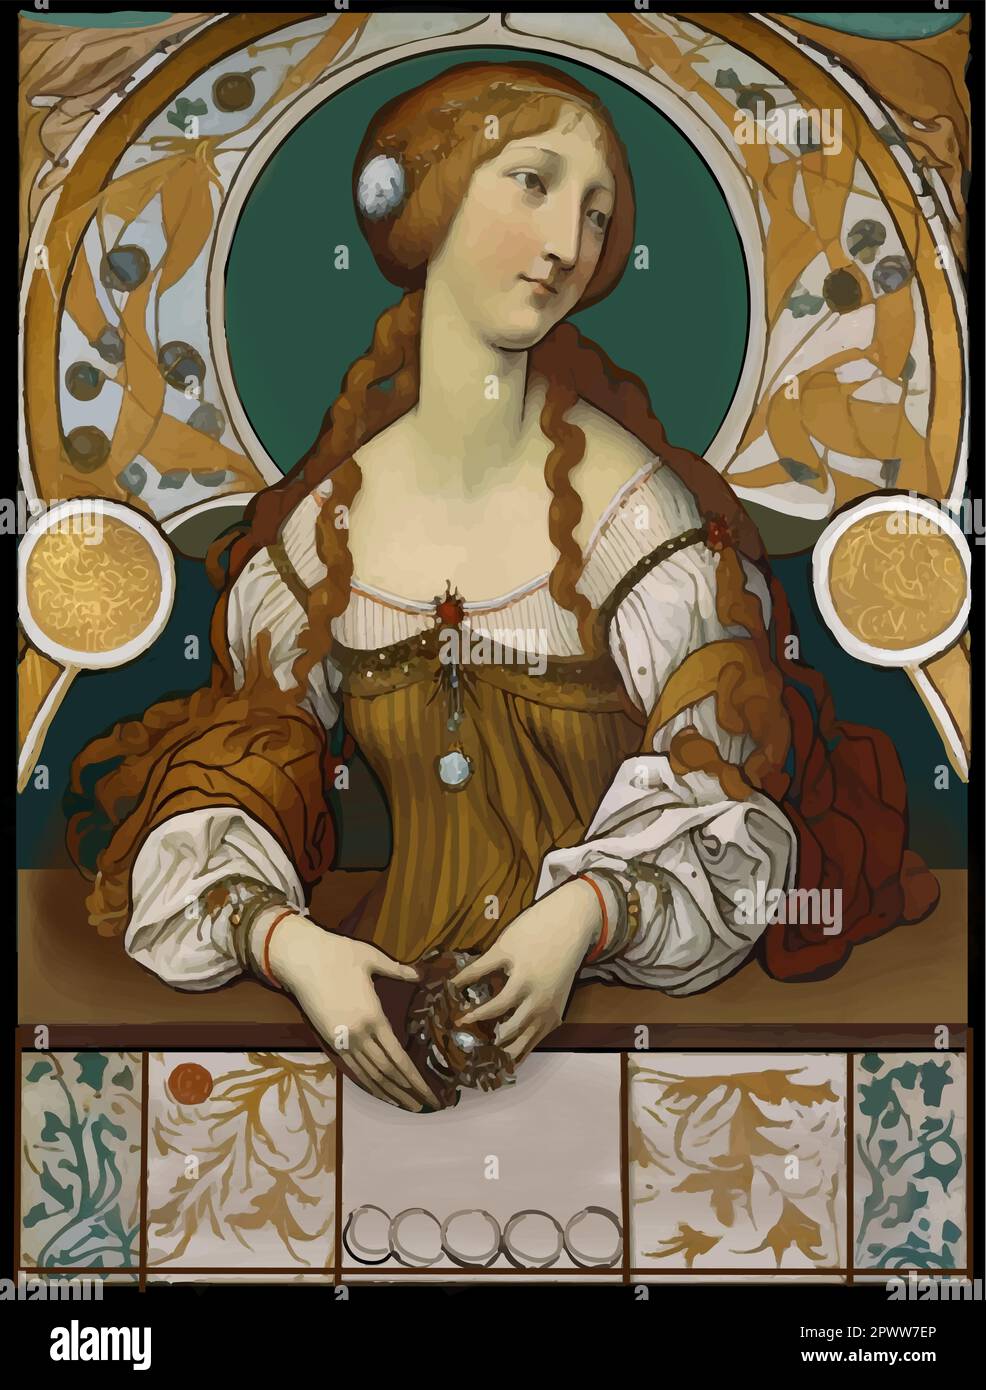 Rothaarige Renaissance-Frau, Stil von Alphonse Mucha, Jugendstil Stock Vektor